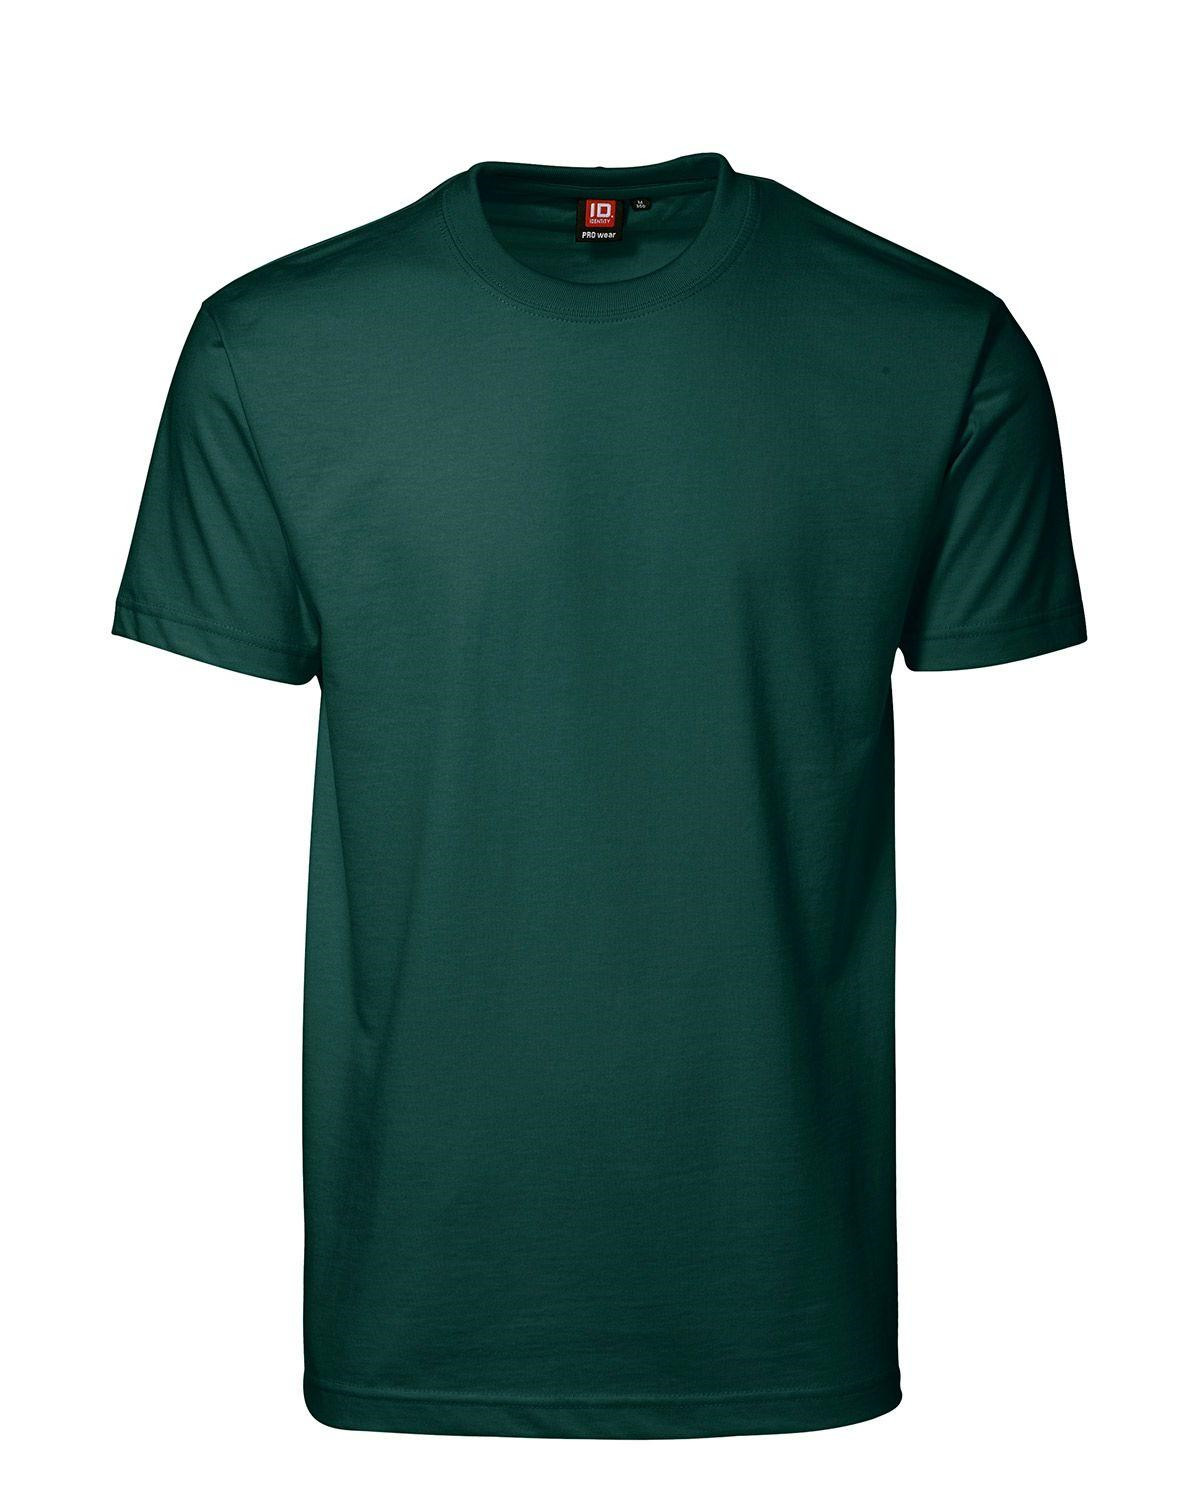 ID PRO Wear T-shirt til Herre (Flaskegrøn, S)